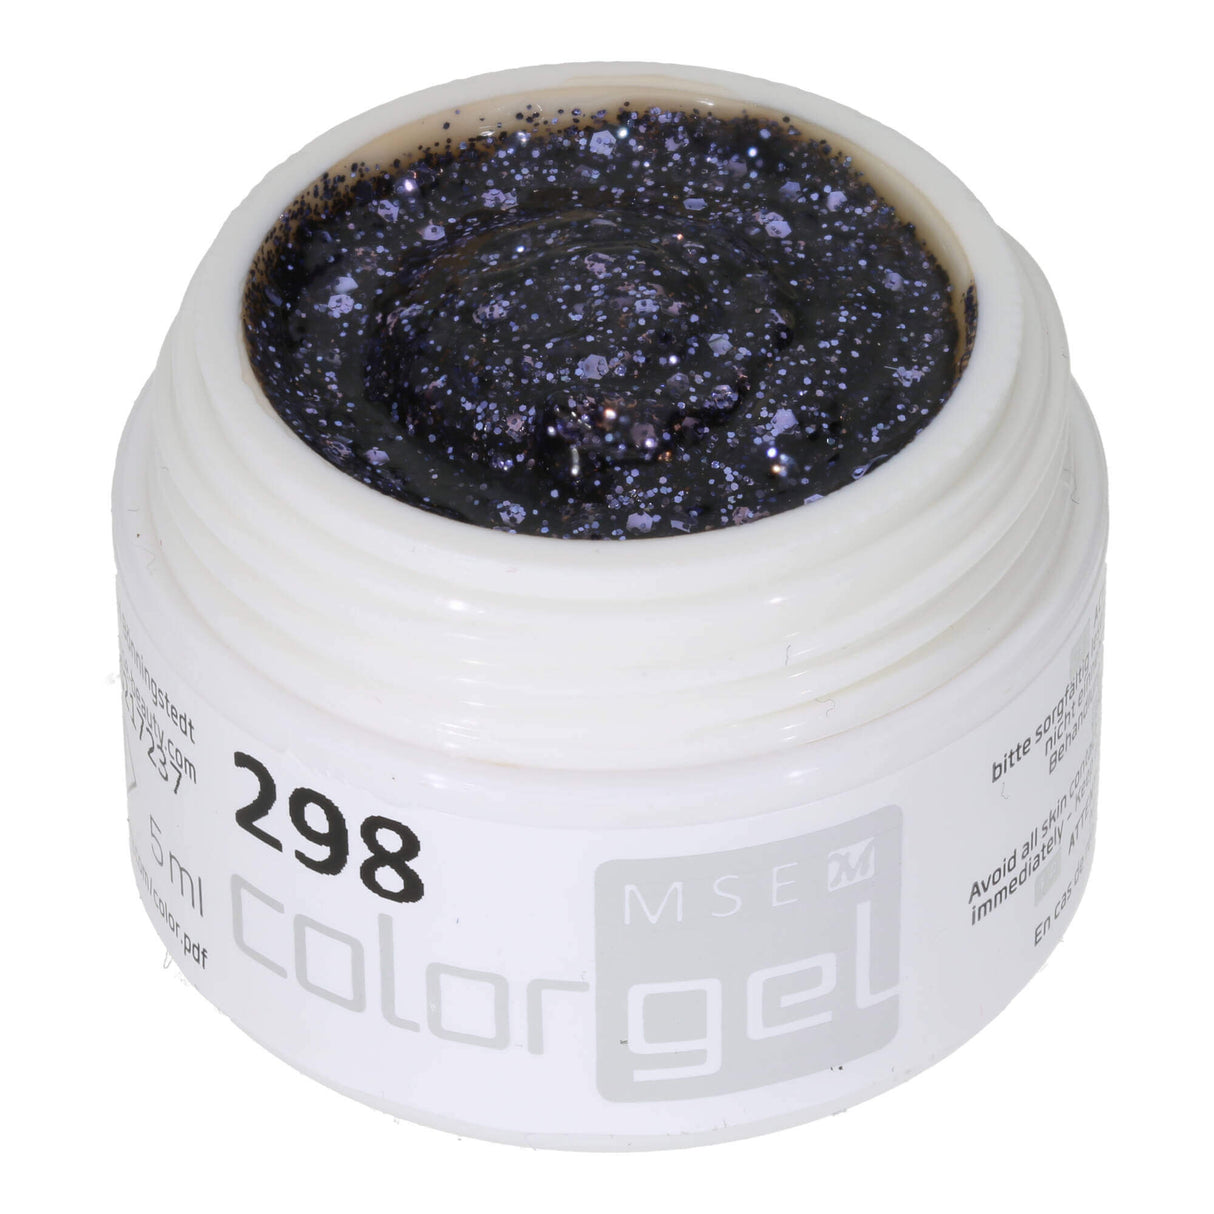 # 298 Premium-GLITTER Color Gel 5ml Classic lilac glitter gel dominated by coarse glitter particles